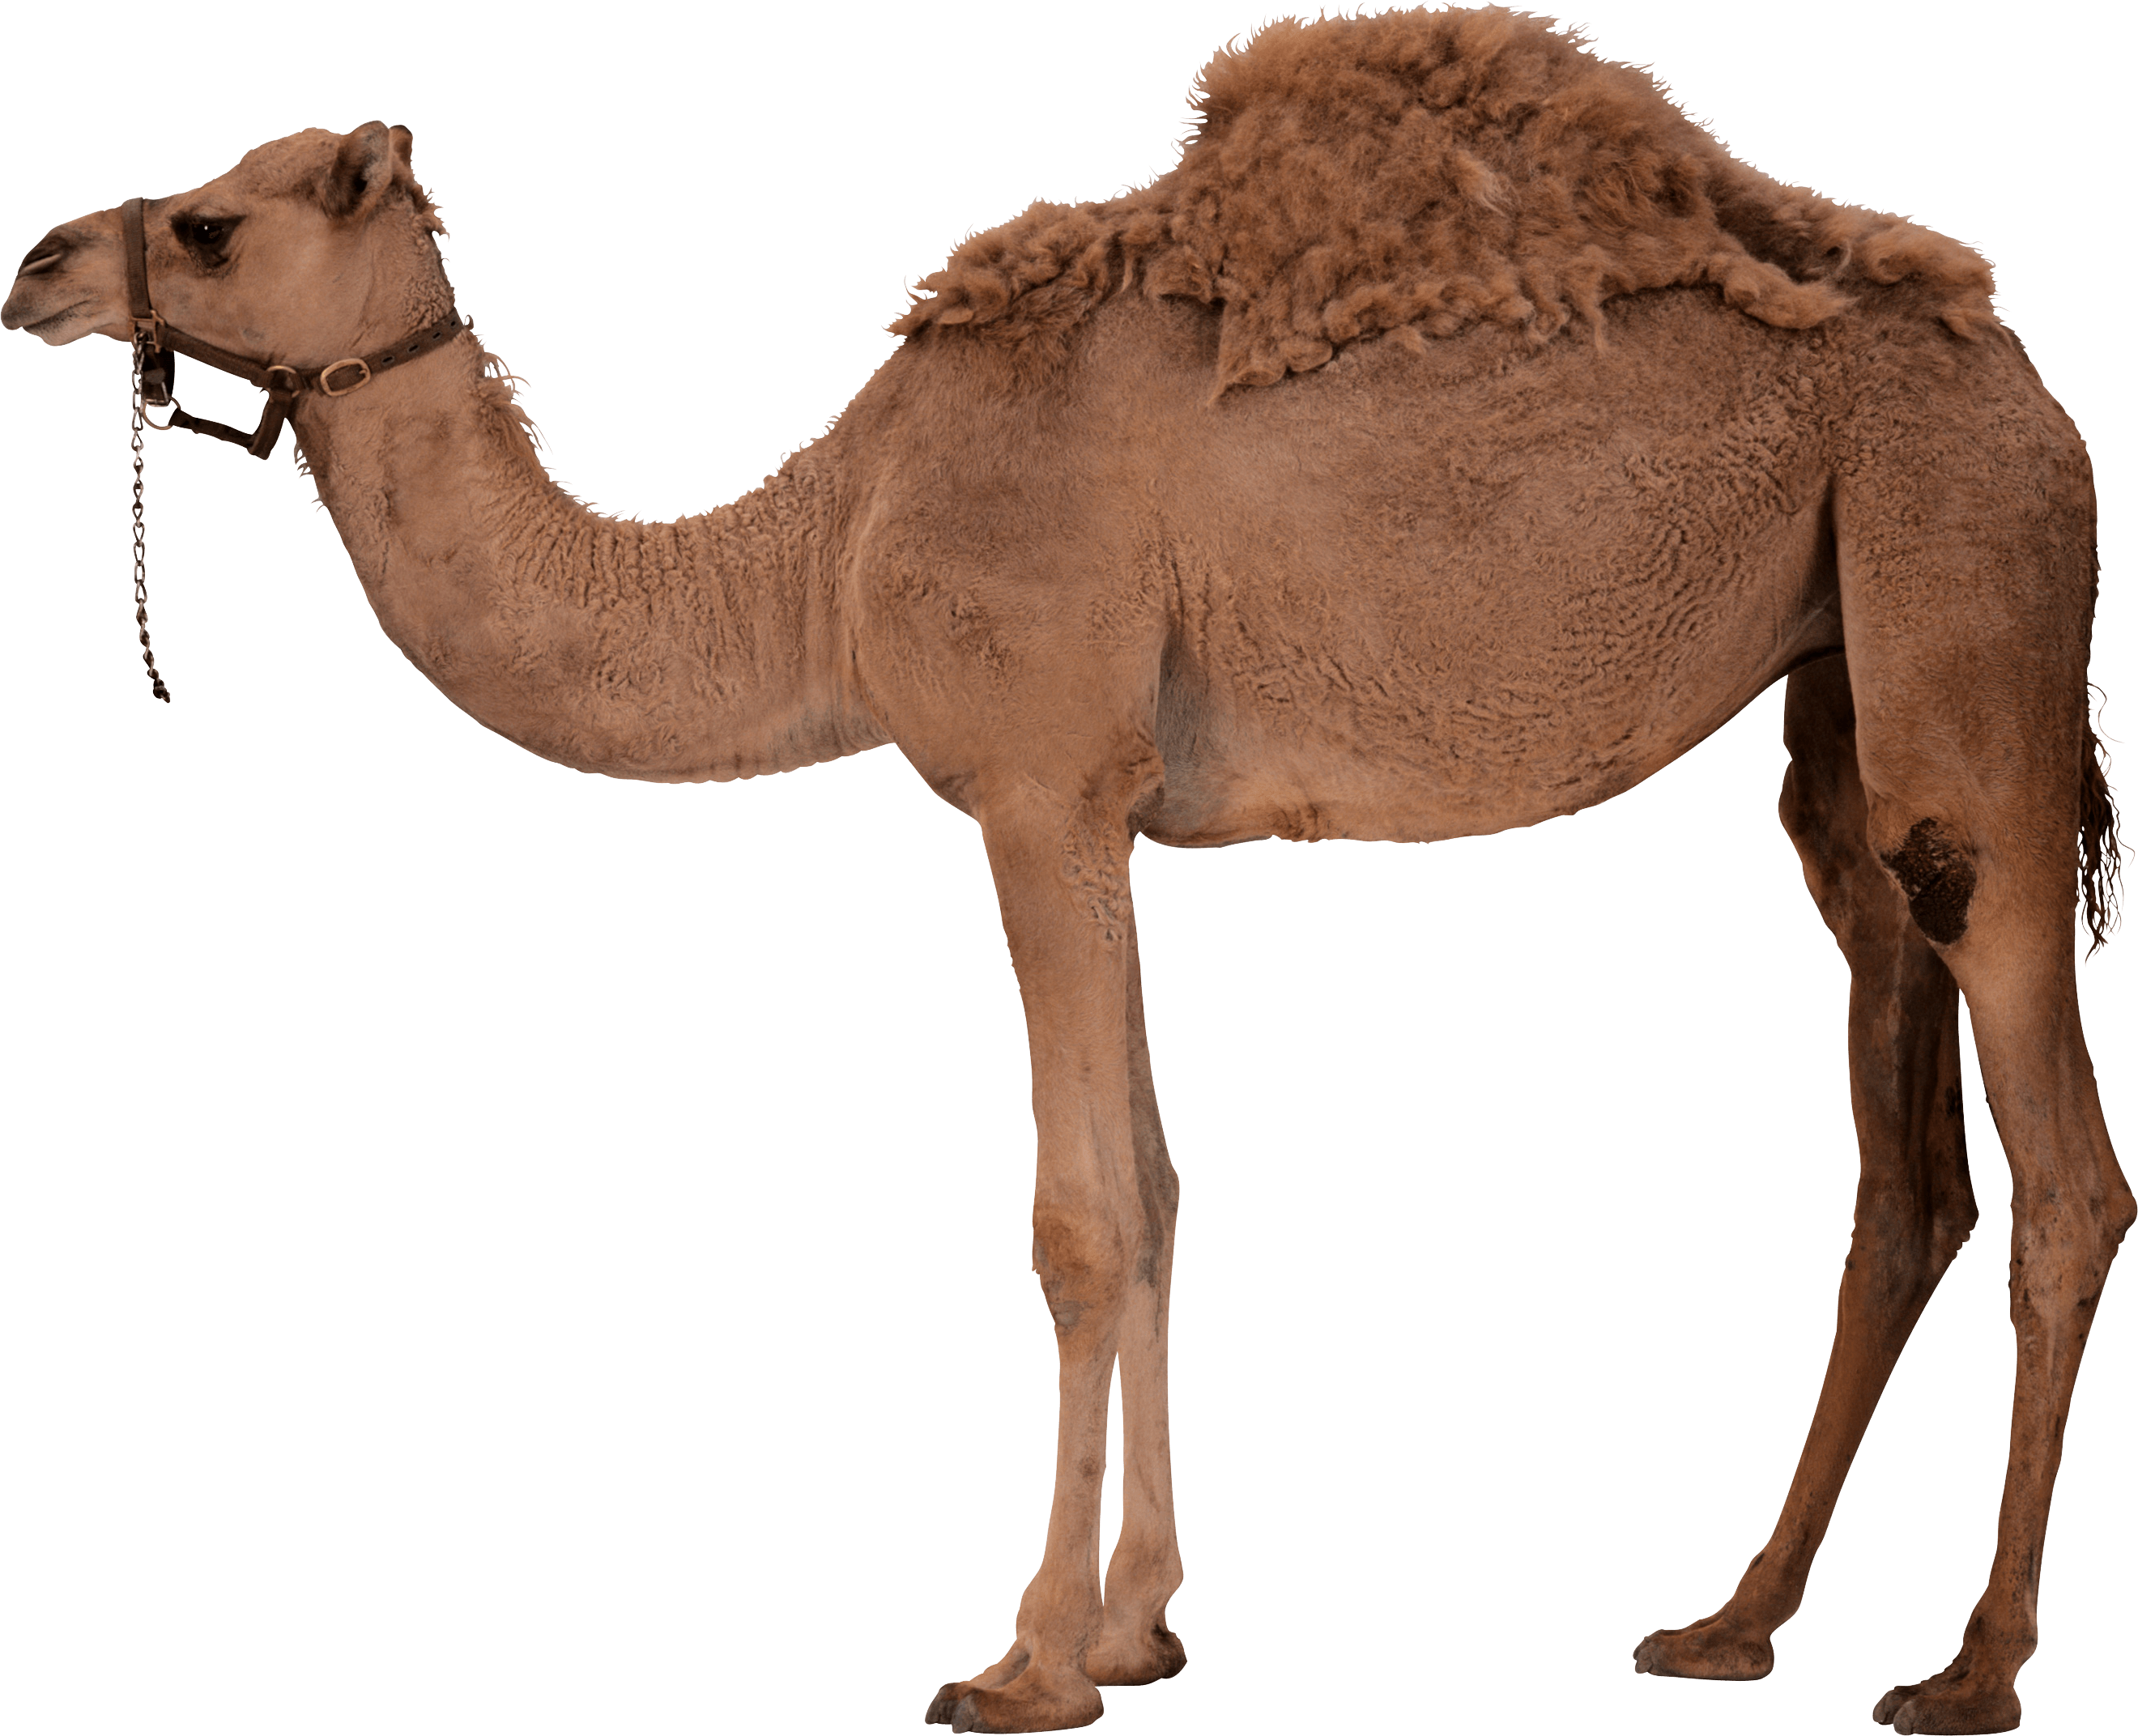 egypt clipart camel